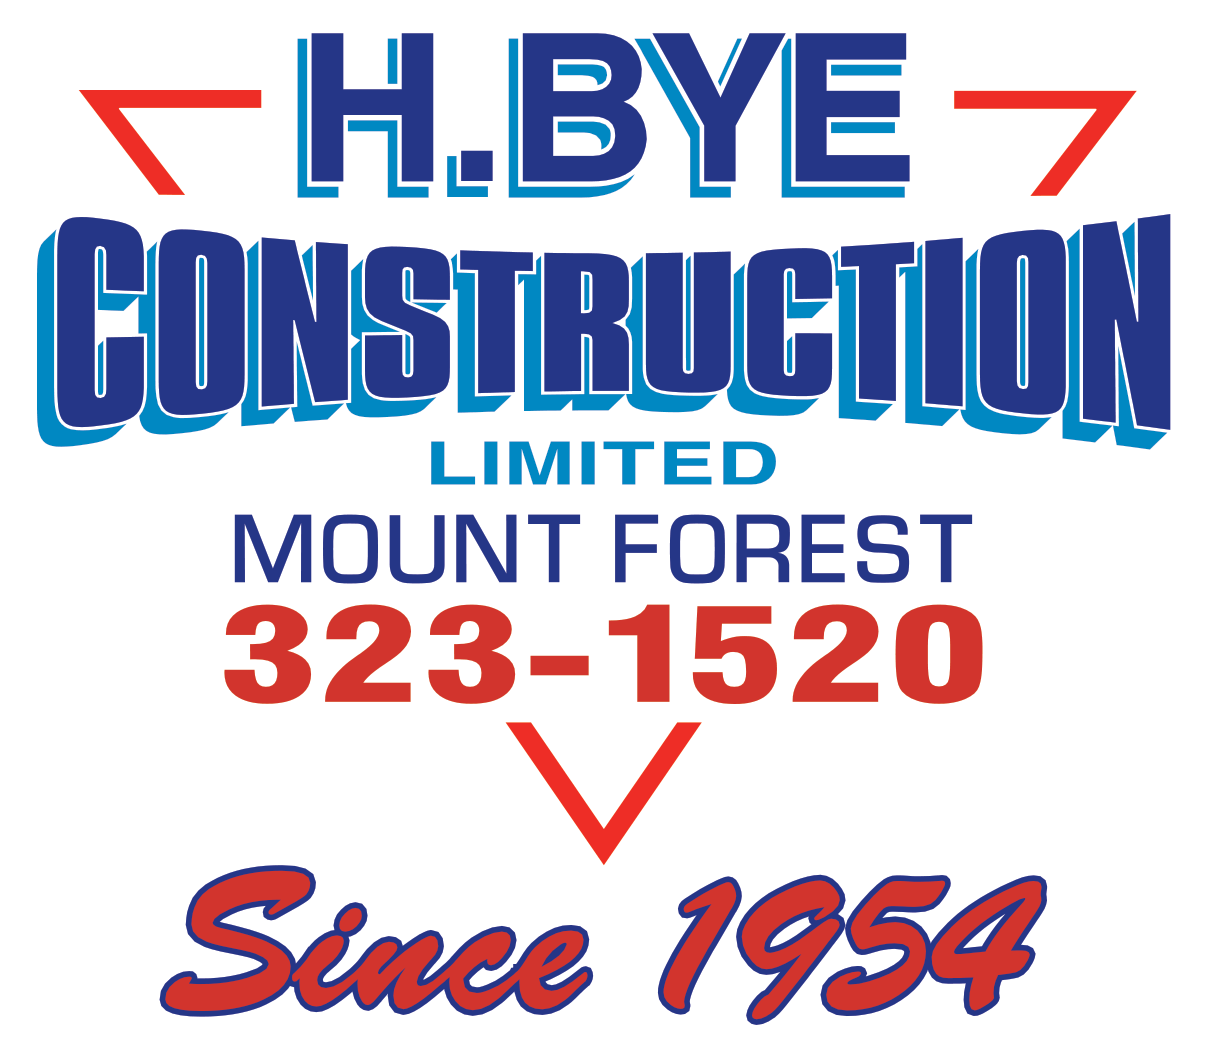 H. Bye Construction Ltd.